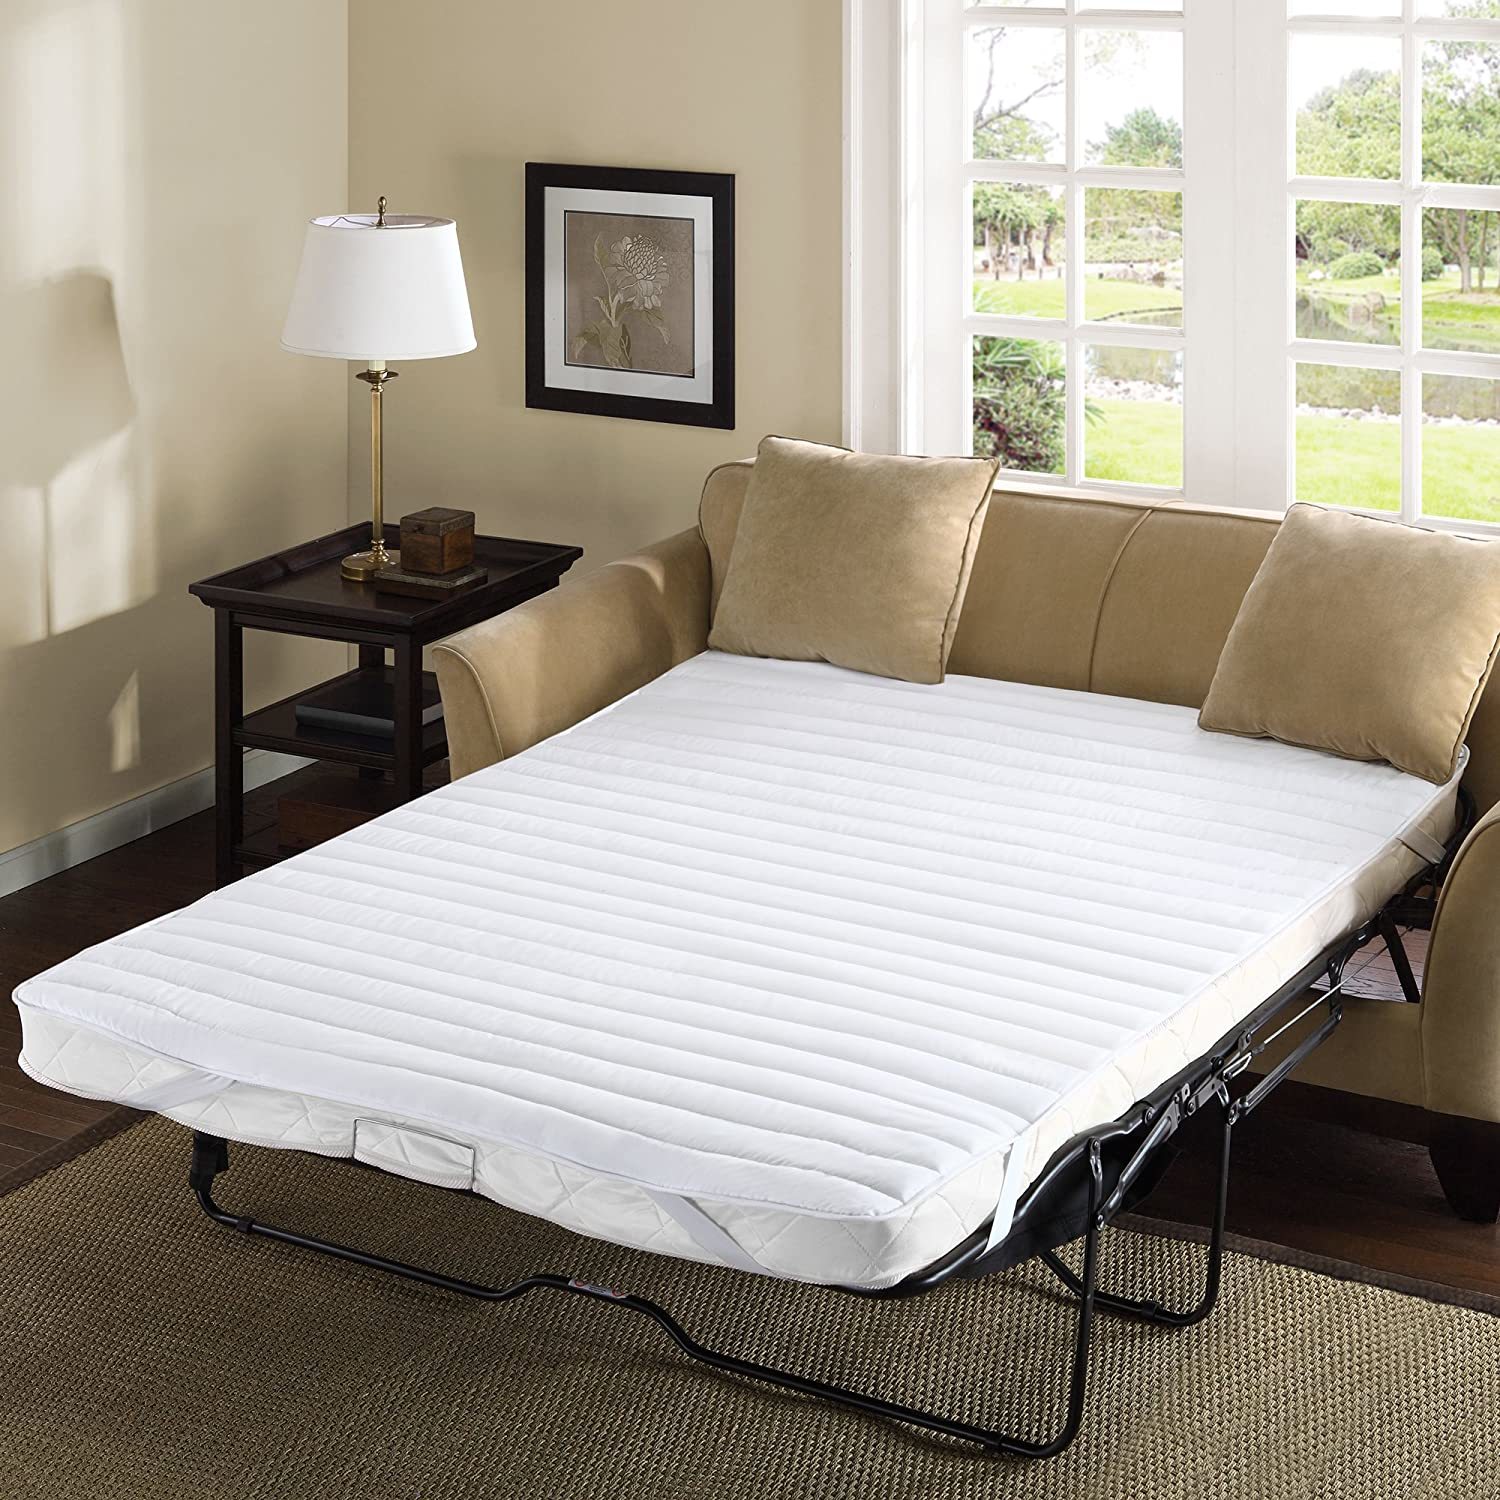 Madison Park Essentials Frisco Waterproof Sofa Bed Mattress Pad,, White - $40.99